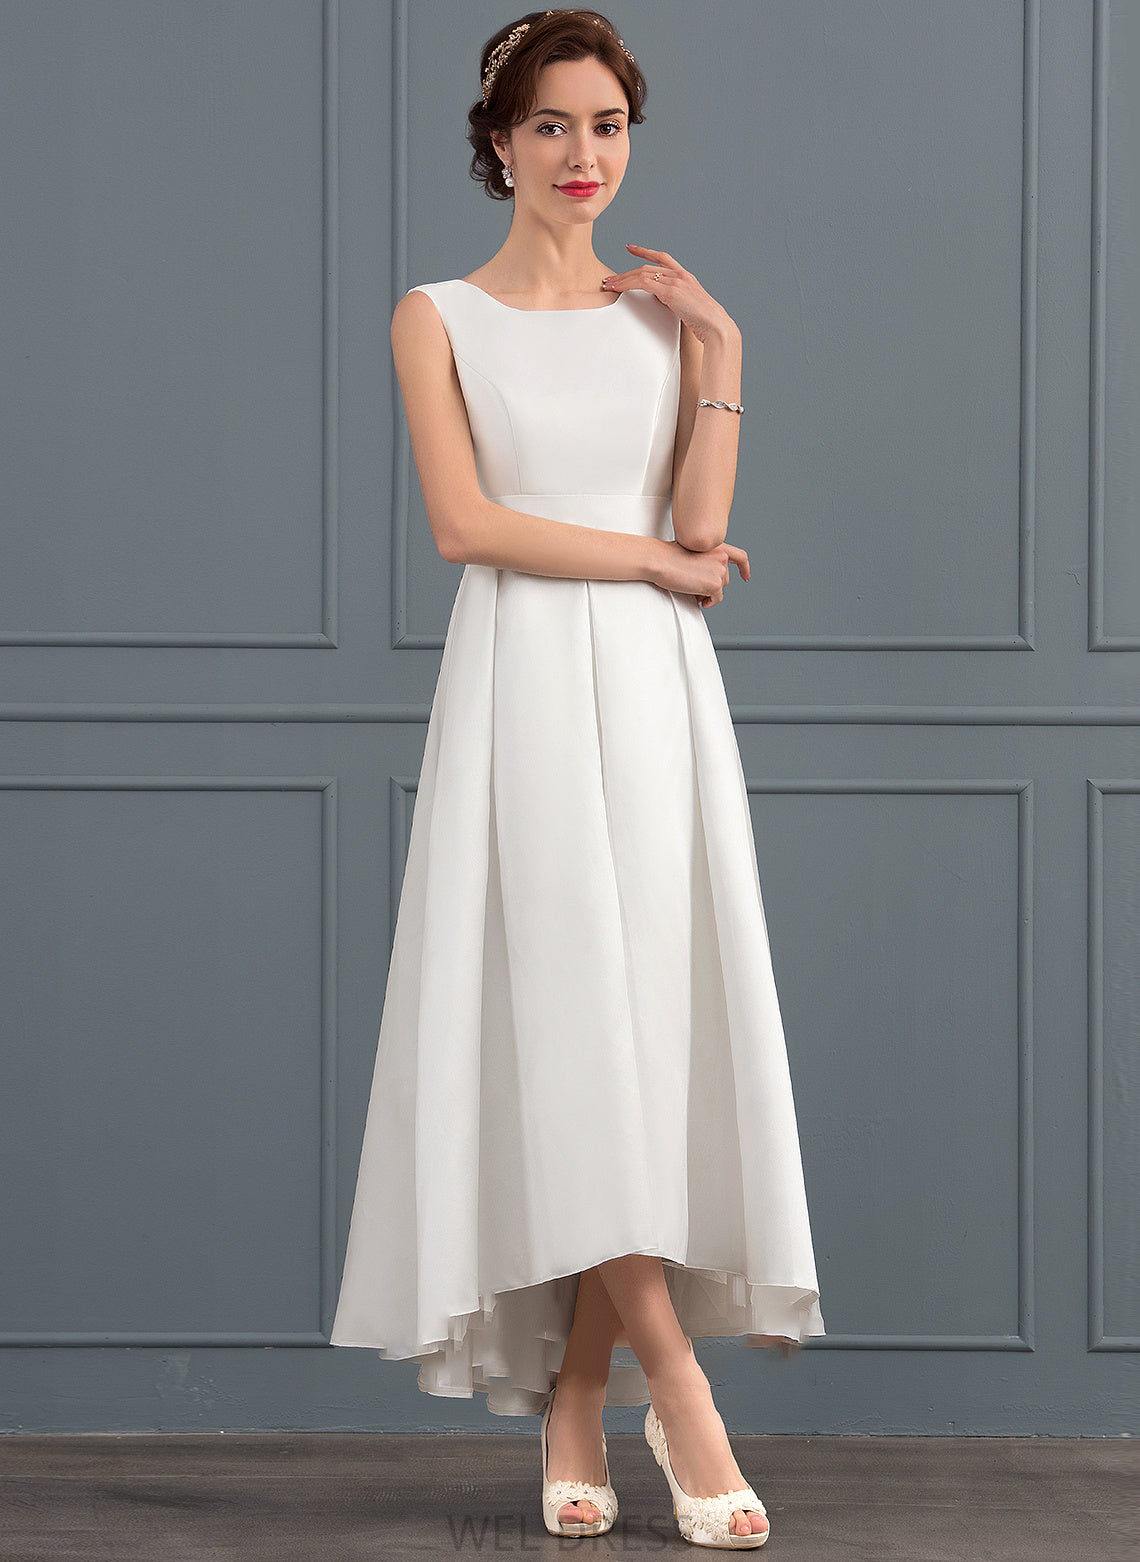 Square Satin Asymmetrical Dress Kate Wedding A-Line Wedding Dresses Neckline